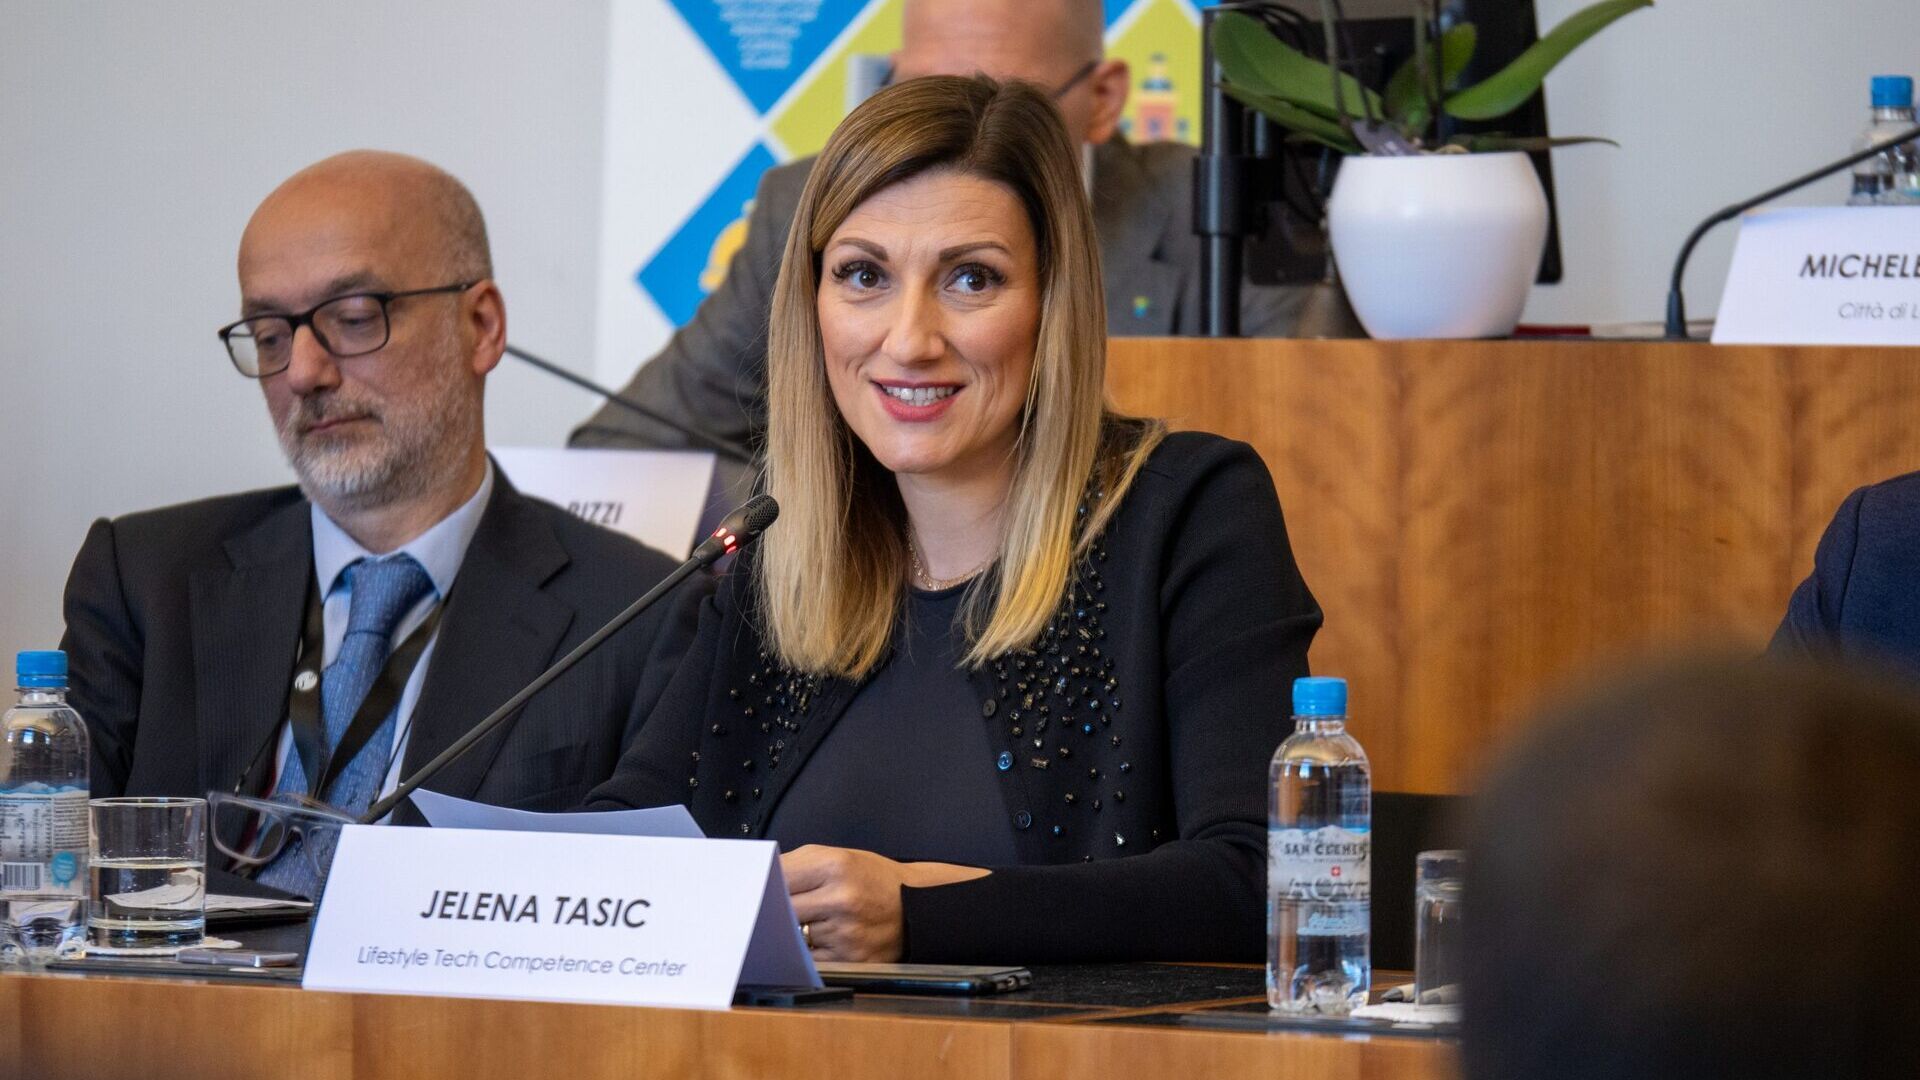 LTCC: Jelena Tašić Pizzolato on Lifestyle Tech kompetentsikeskuste ühenduse tegevjuht